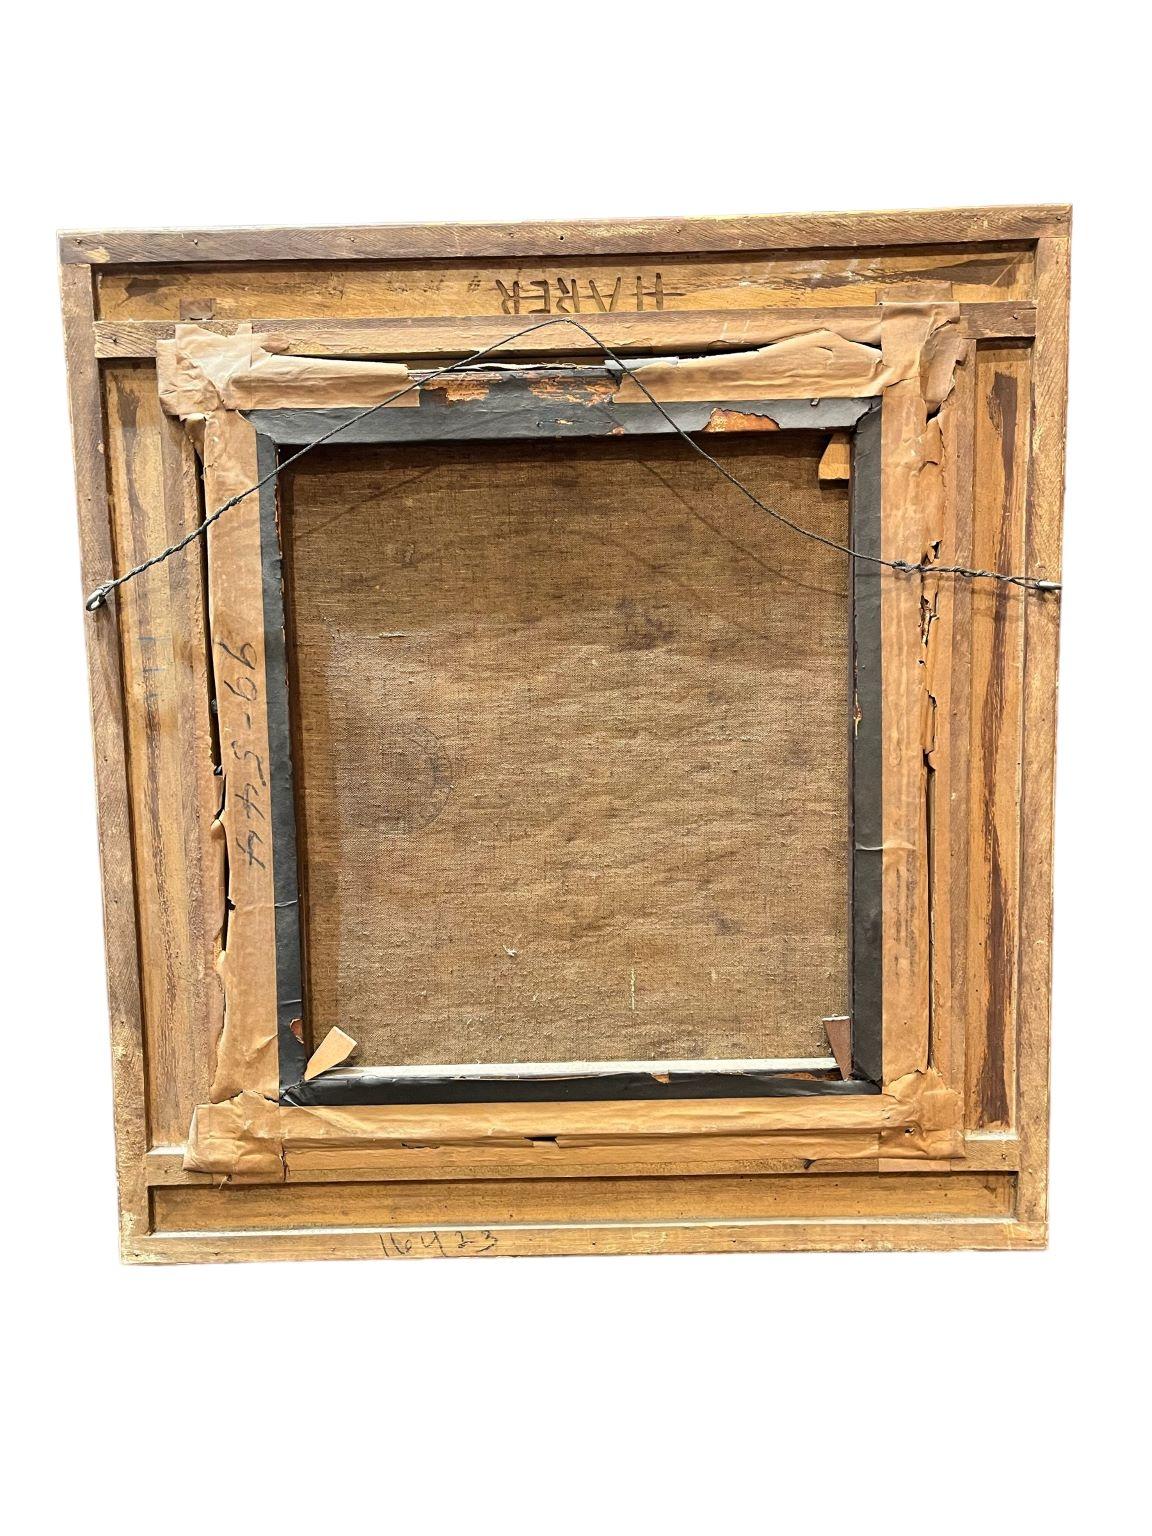 Stellar Frederick Harer Gold Gilt Wood Frame Circa 1920-1930’s For Sale 4